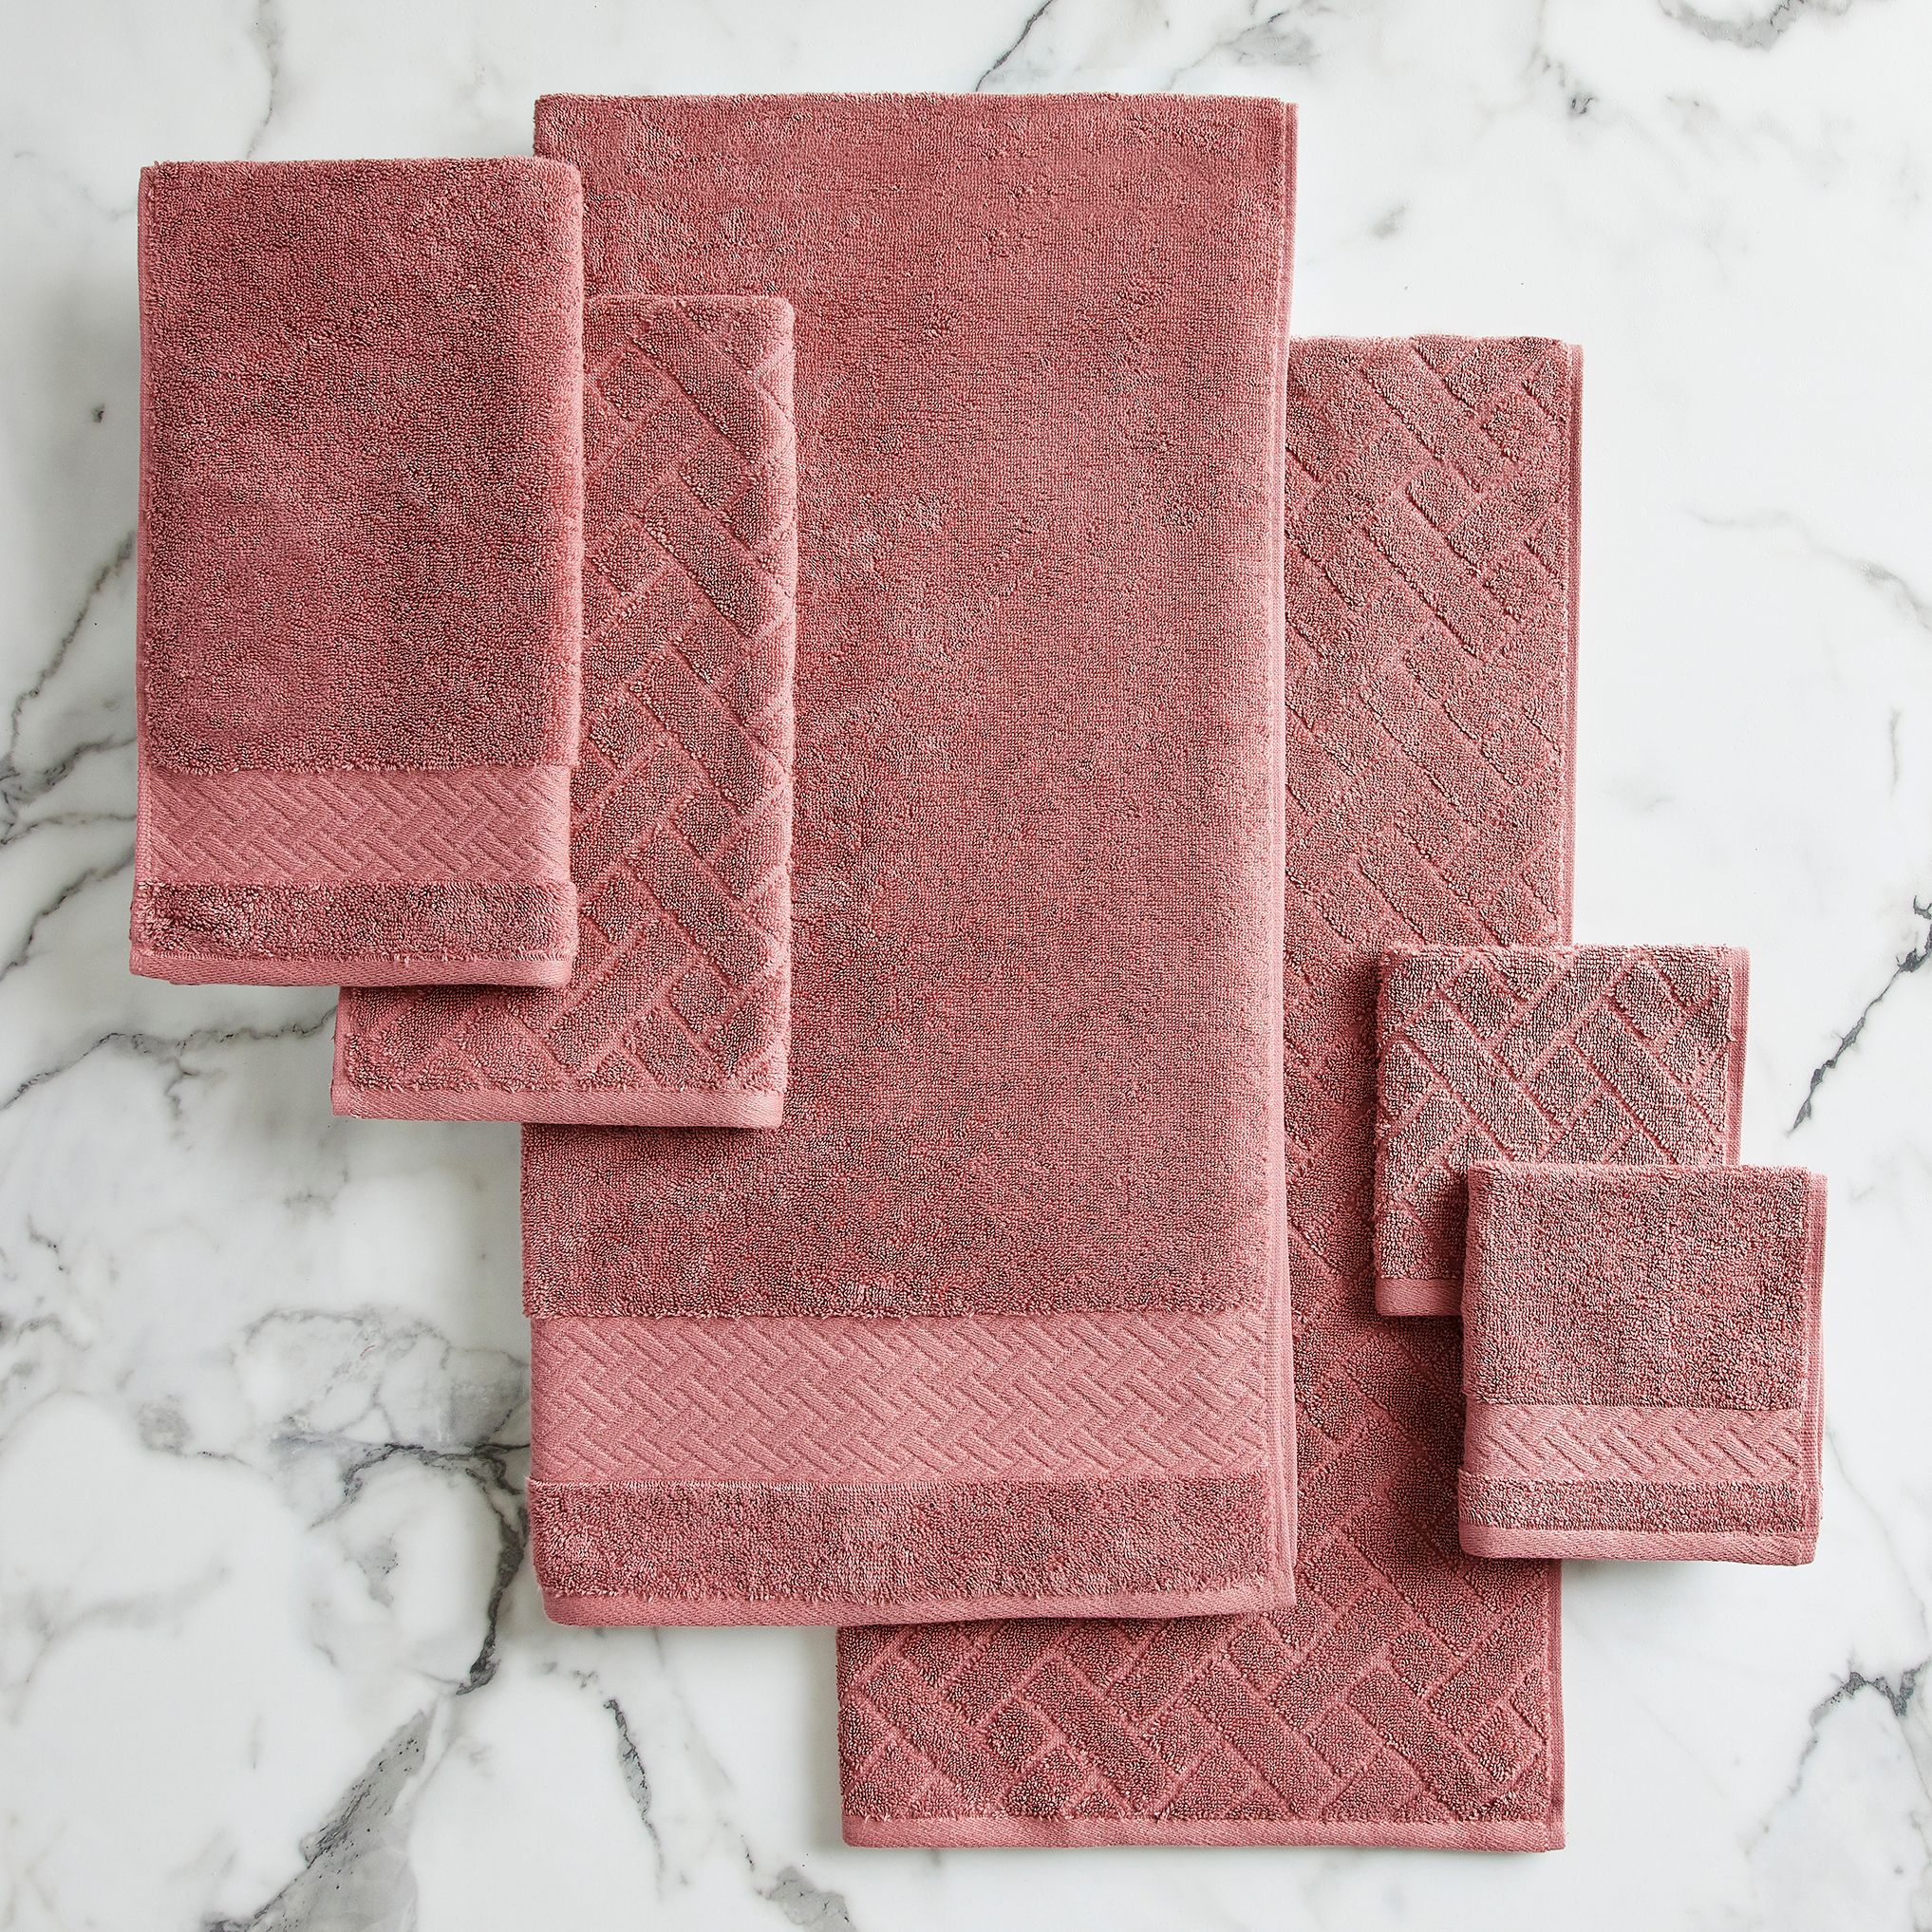 Better Homes & Gardens Wicker Jacquard 6 Piece Bath Towel Set, Ash Rose - image 2 of 4